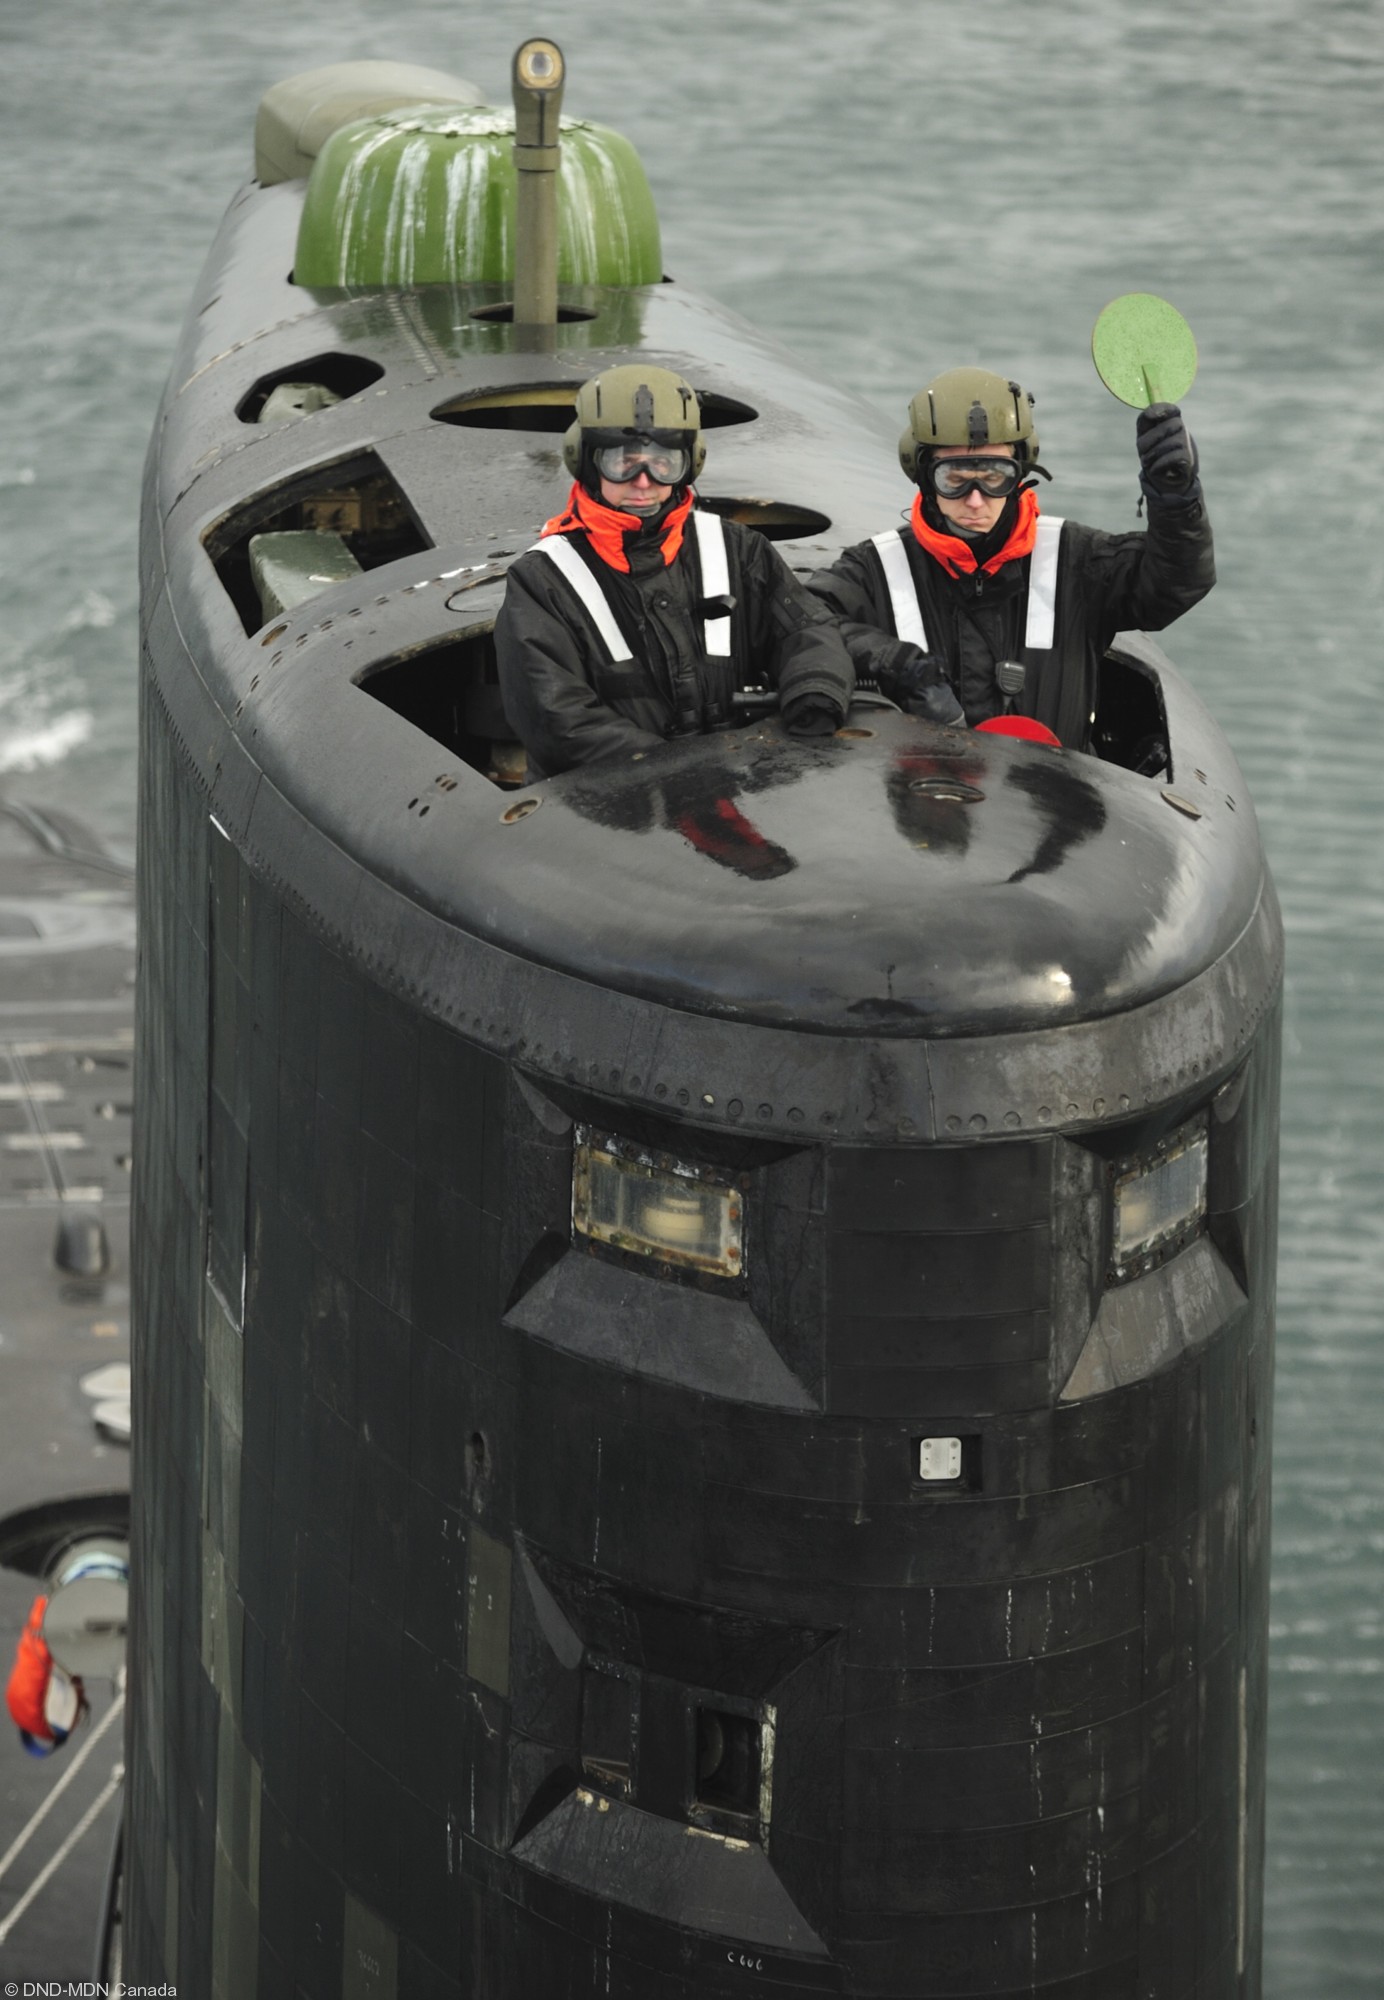 ssk-876 hmcs victoria upholder class attack submarine hunter killer ncsm royal canadian navy 34